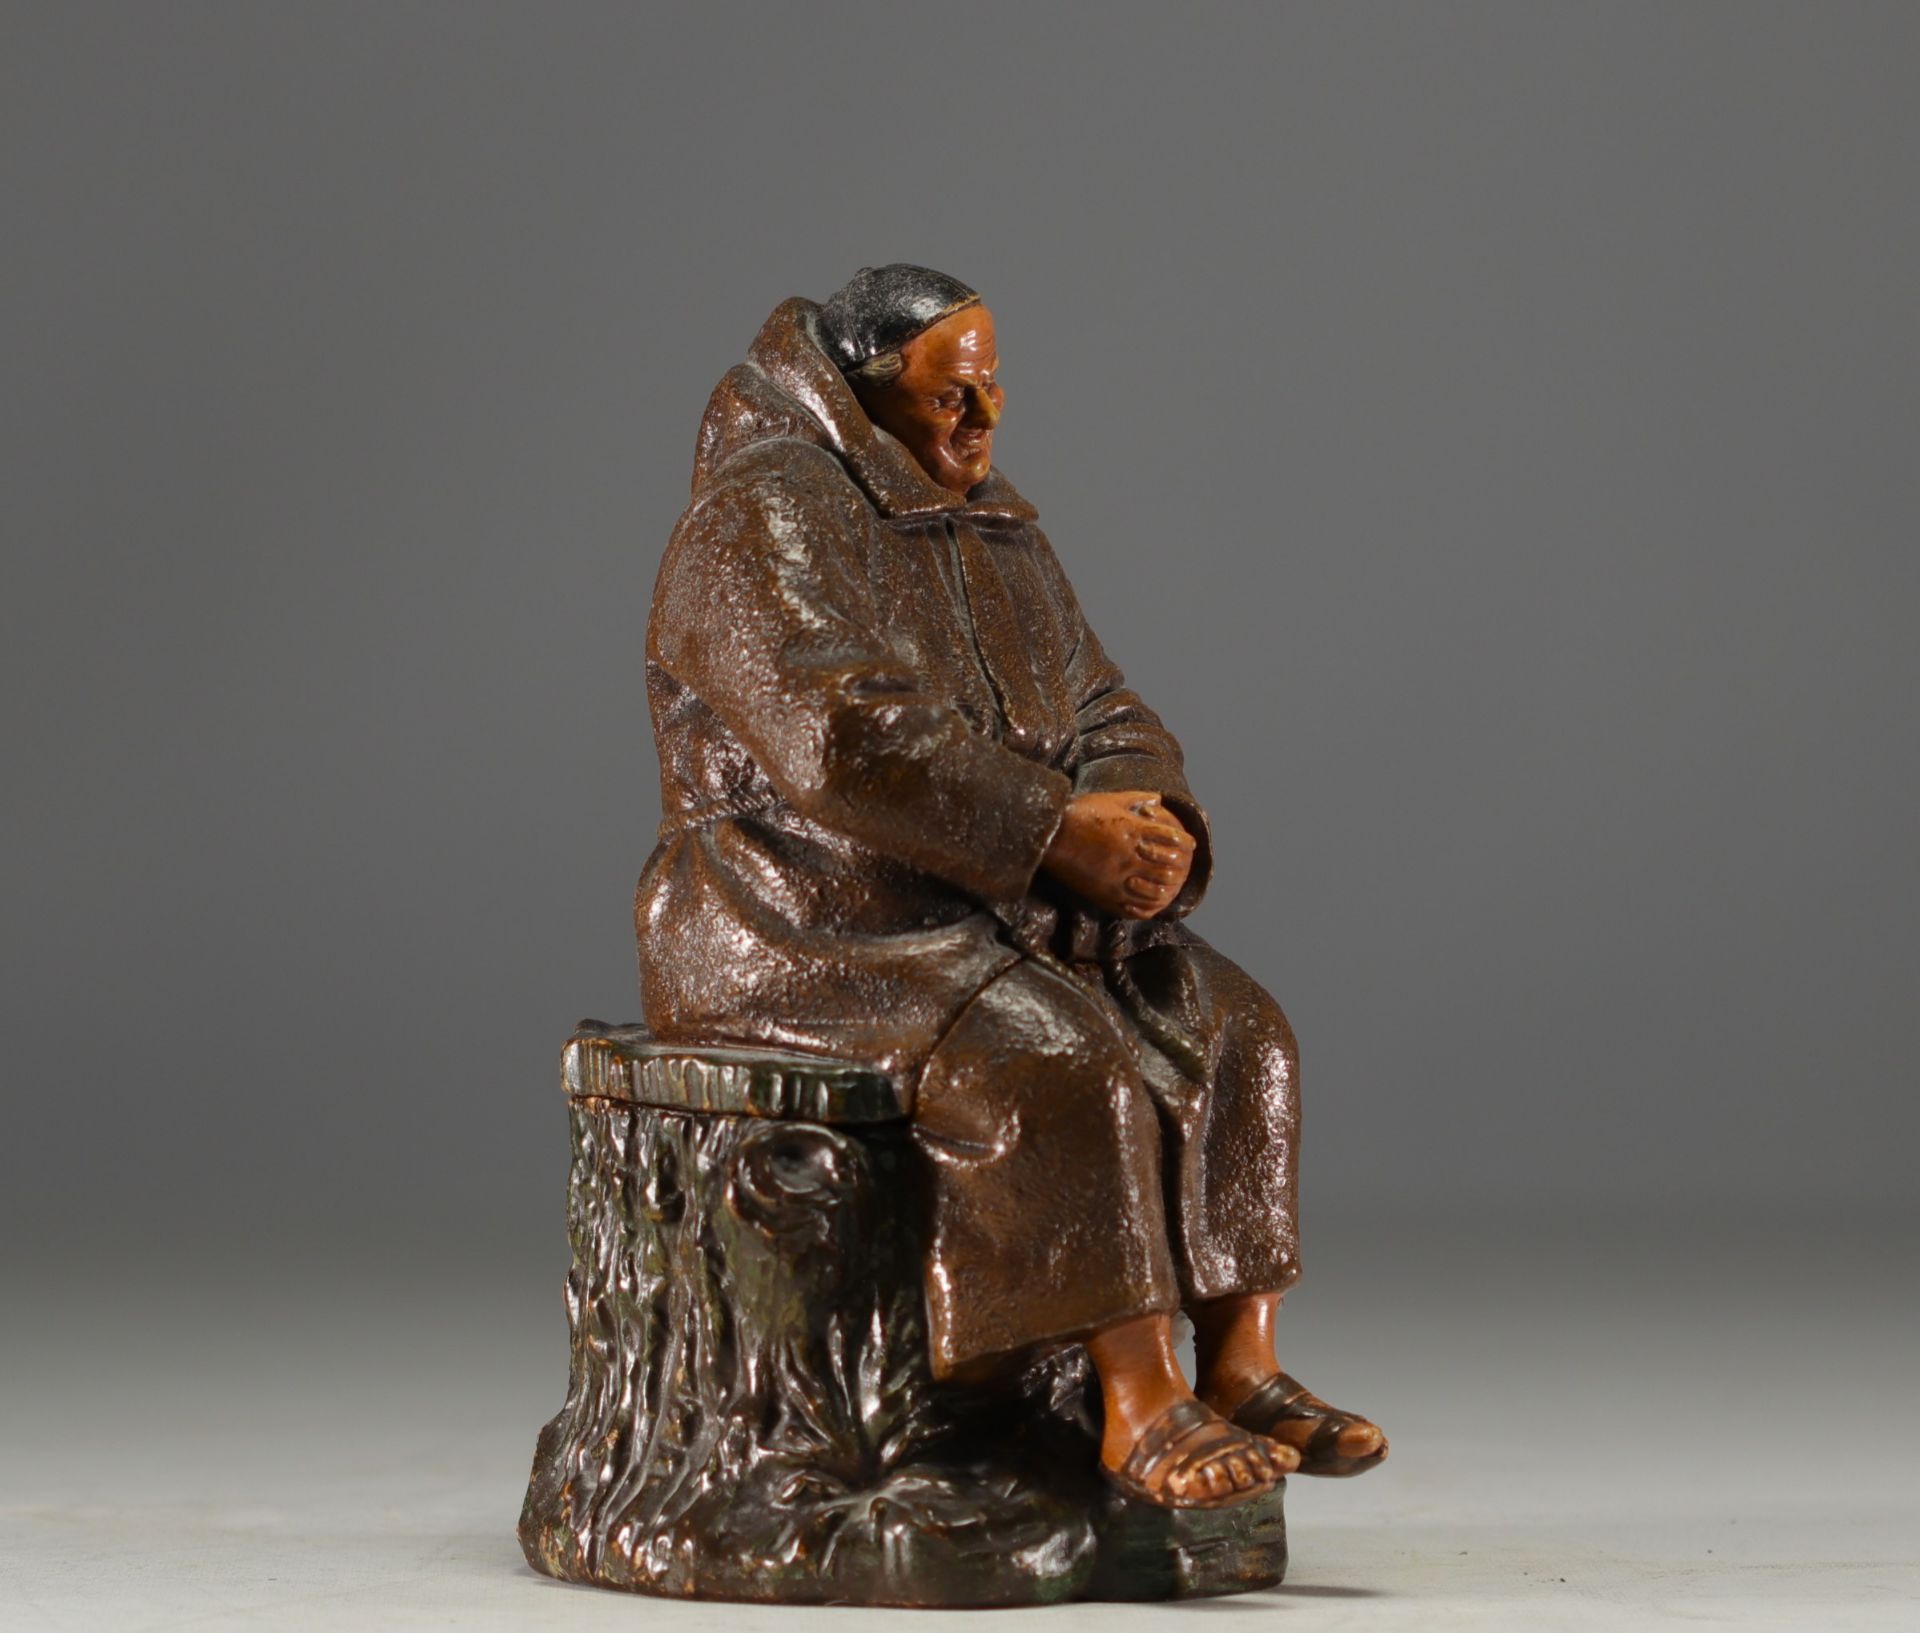 Bernhard BLOCH (1836-1909) "The monk at siesta" Polychrome terracotta tobacco pot. - Image 4 of 4